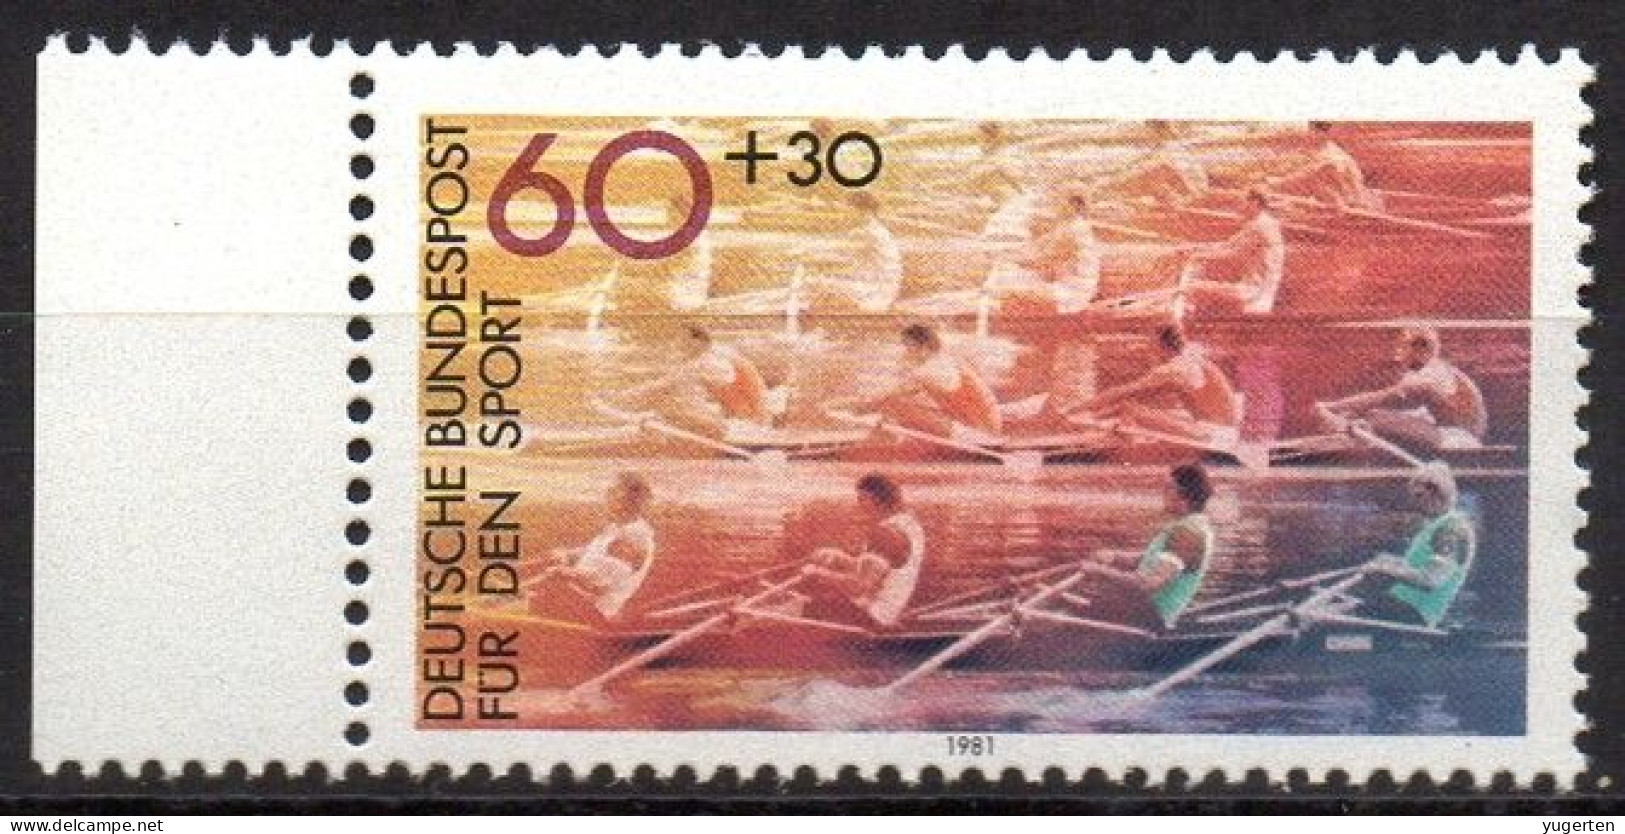 GERMANY 1981 - 1v - MNH - Aviron - Rowing - Rudern - Remo - Canottaggio - Roeien - Sport - Sports - Roeisport